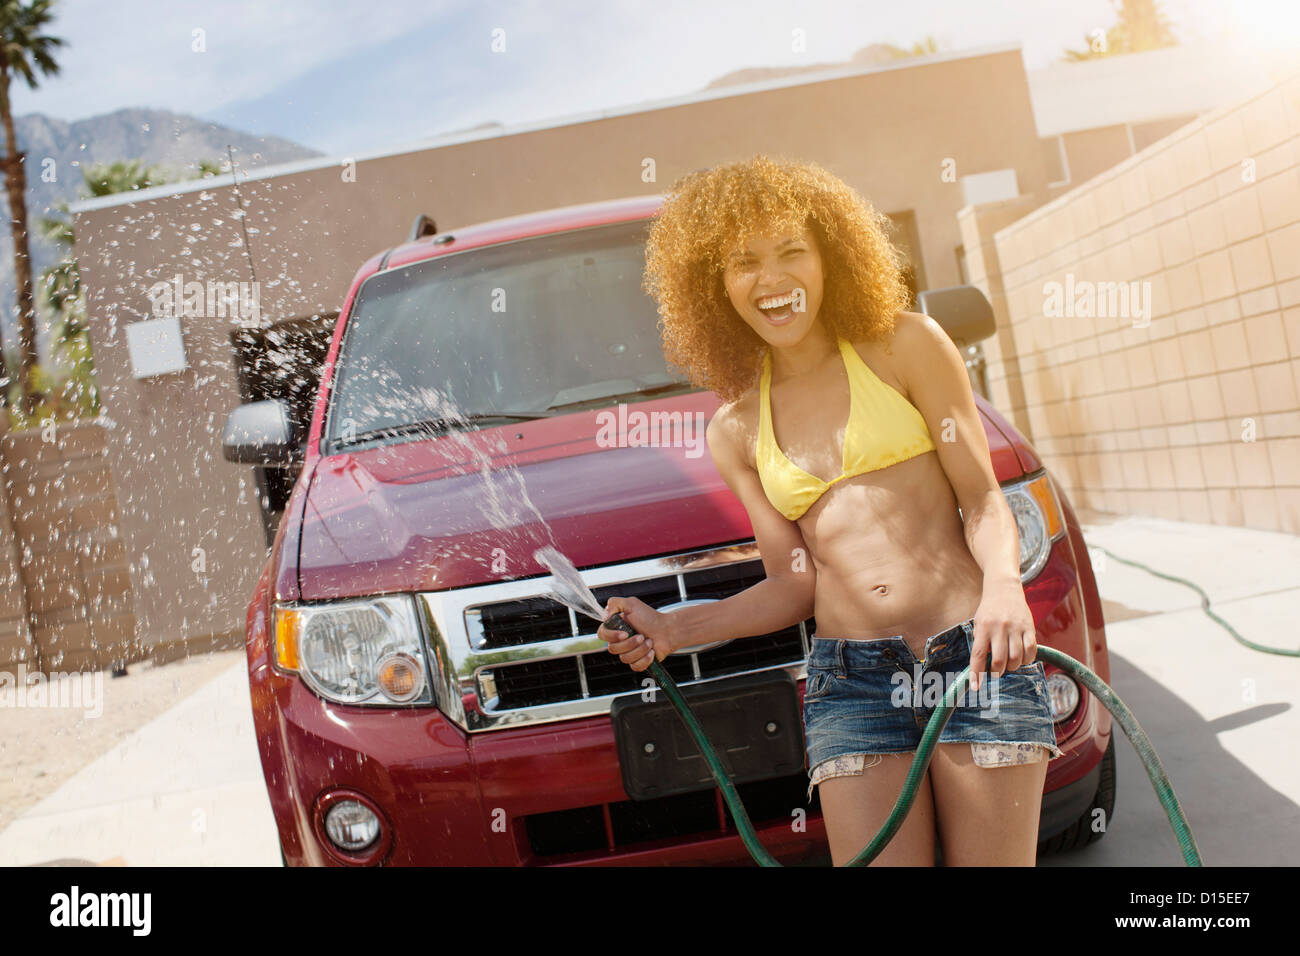 Bikini Carwash Images – Browse 245 Stock Photos, Vectors, and Video